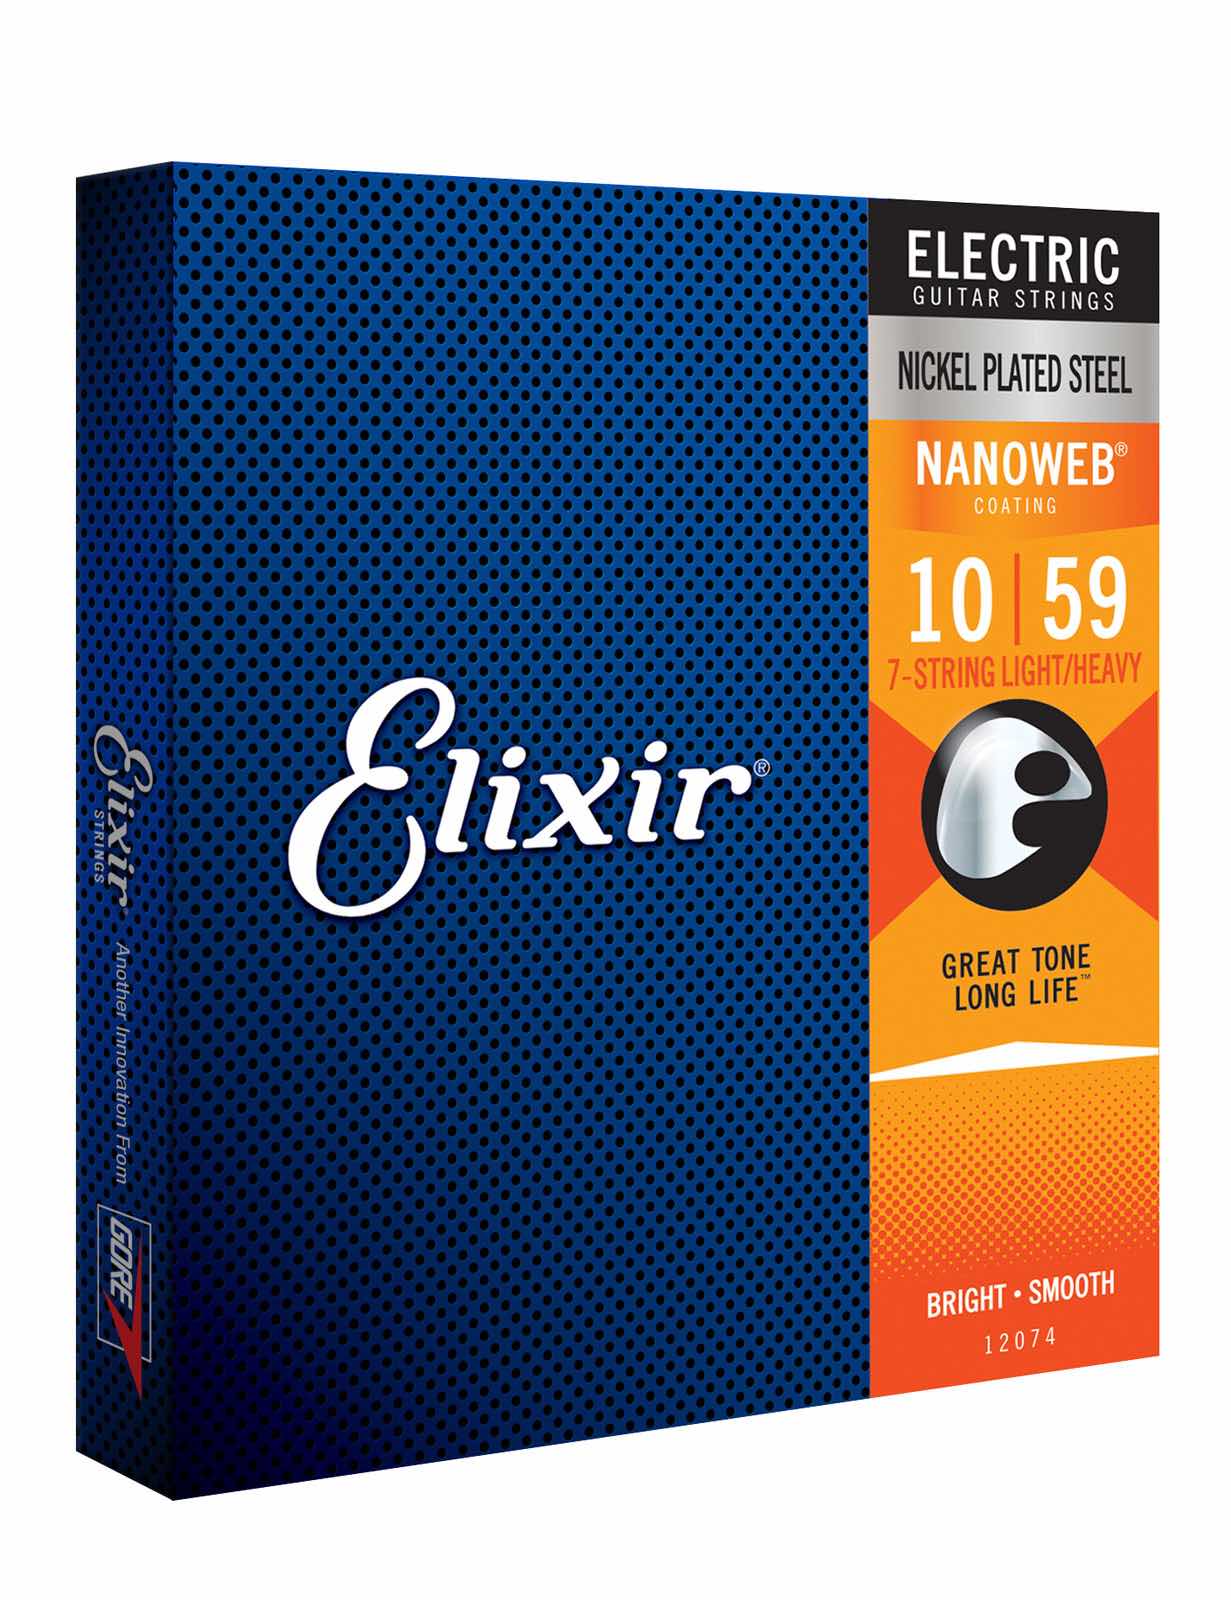 ELIXIR 12074 NANOWEB LIGHT/HEAVY 7C 10-59